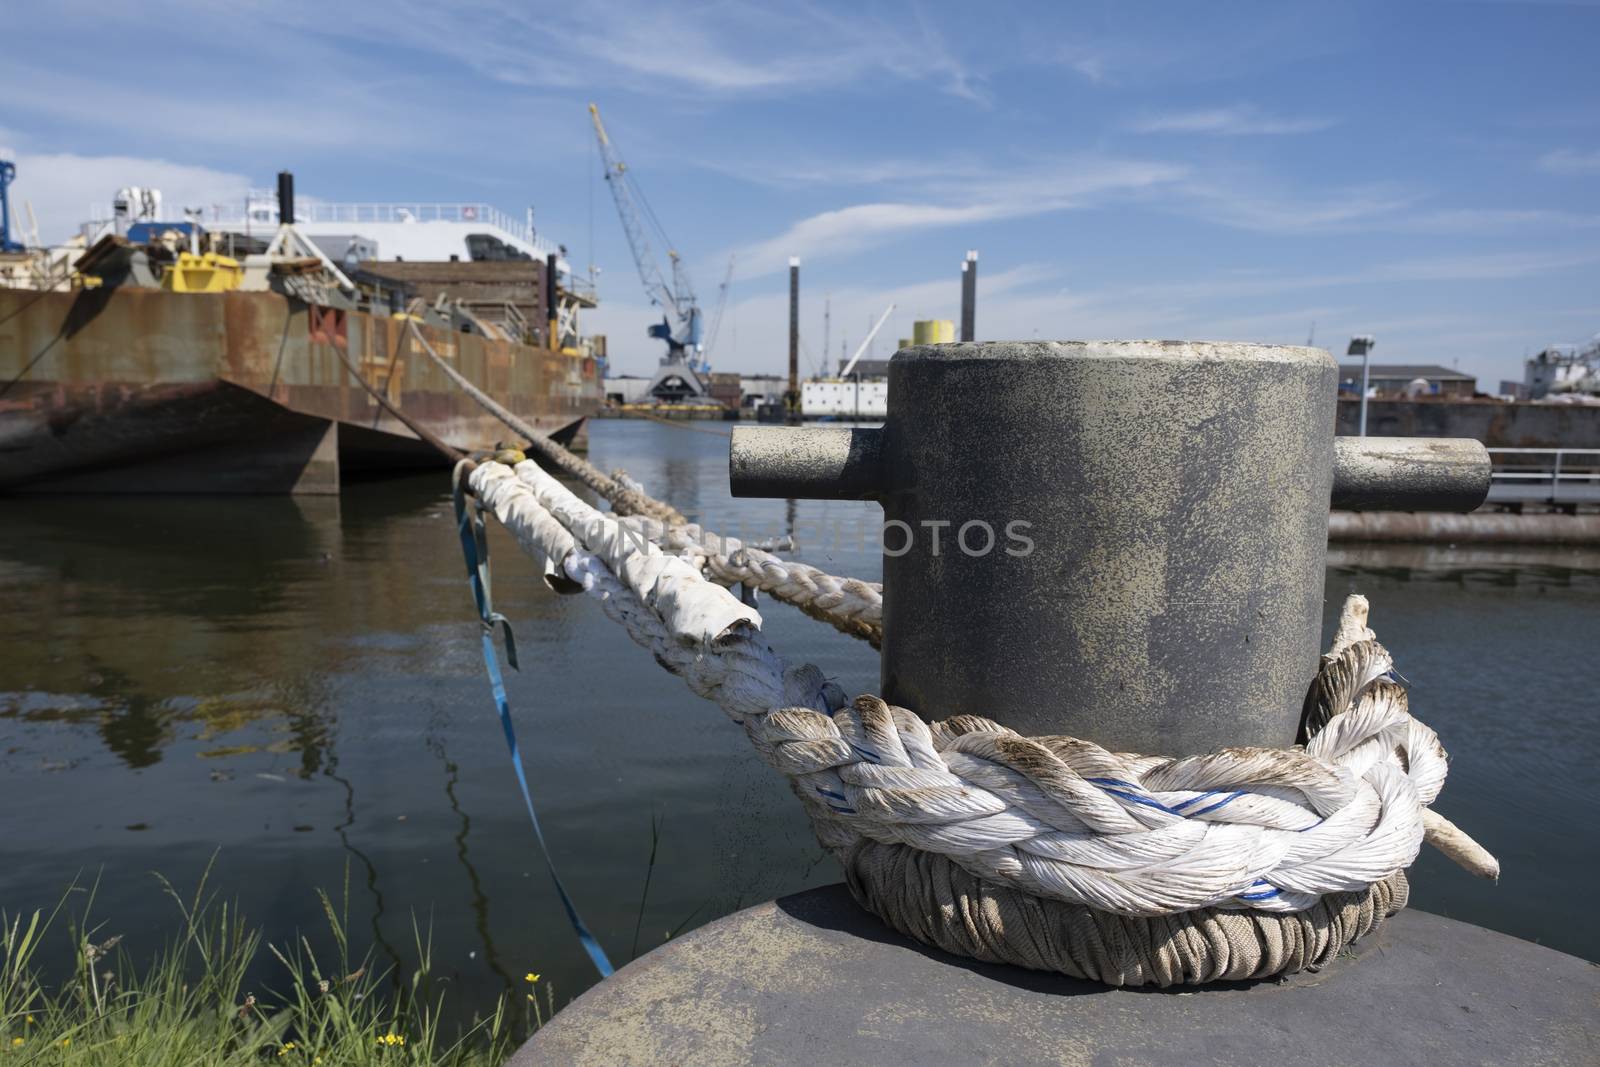 Rusty mooring bollard with ship ropes. Bollard with mooring ropes on the quay. Moored ship at the port quay in the Netherlands